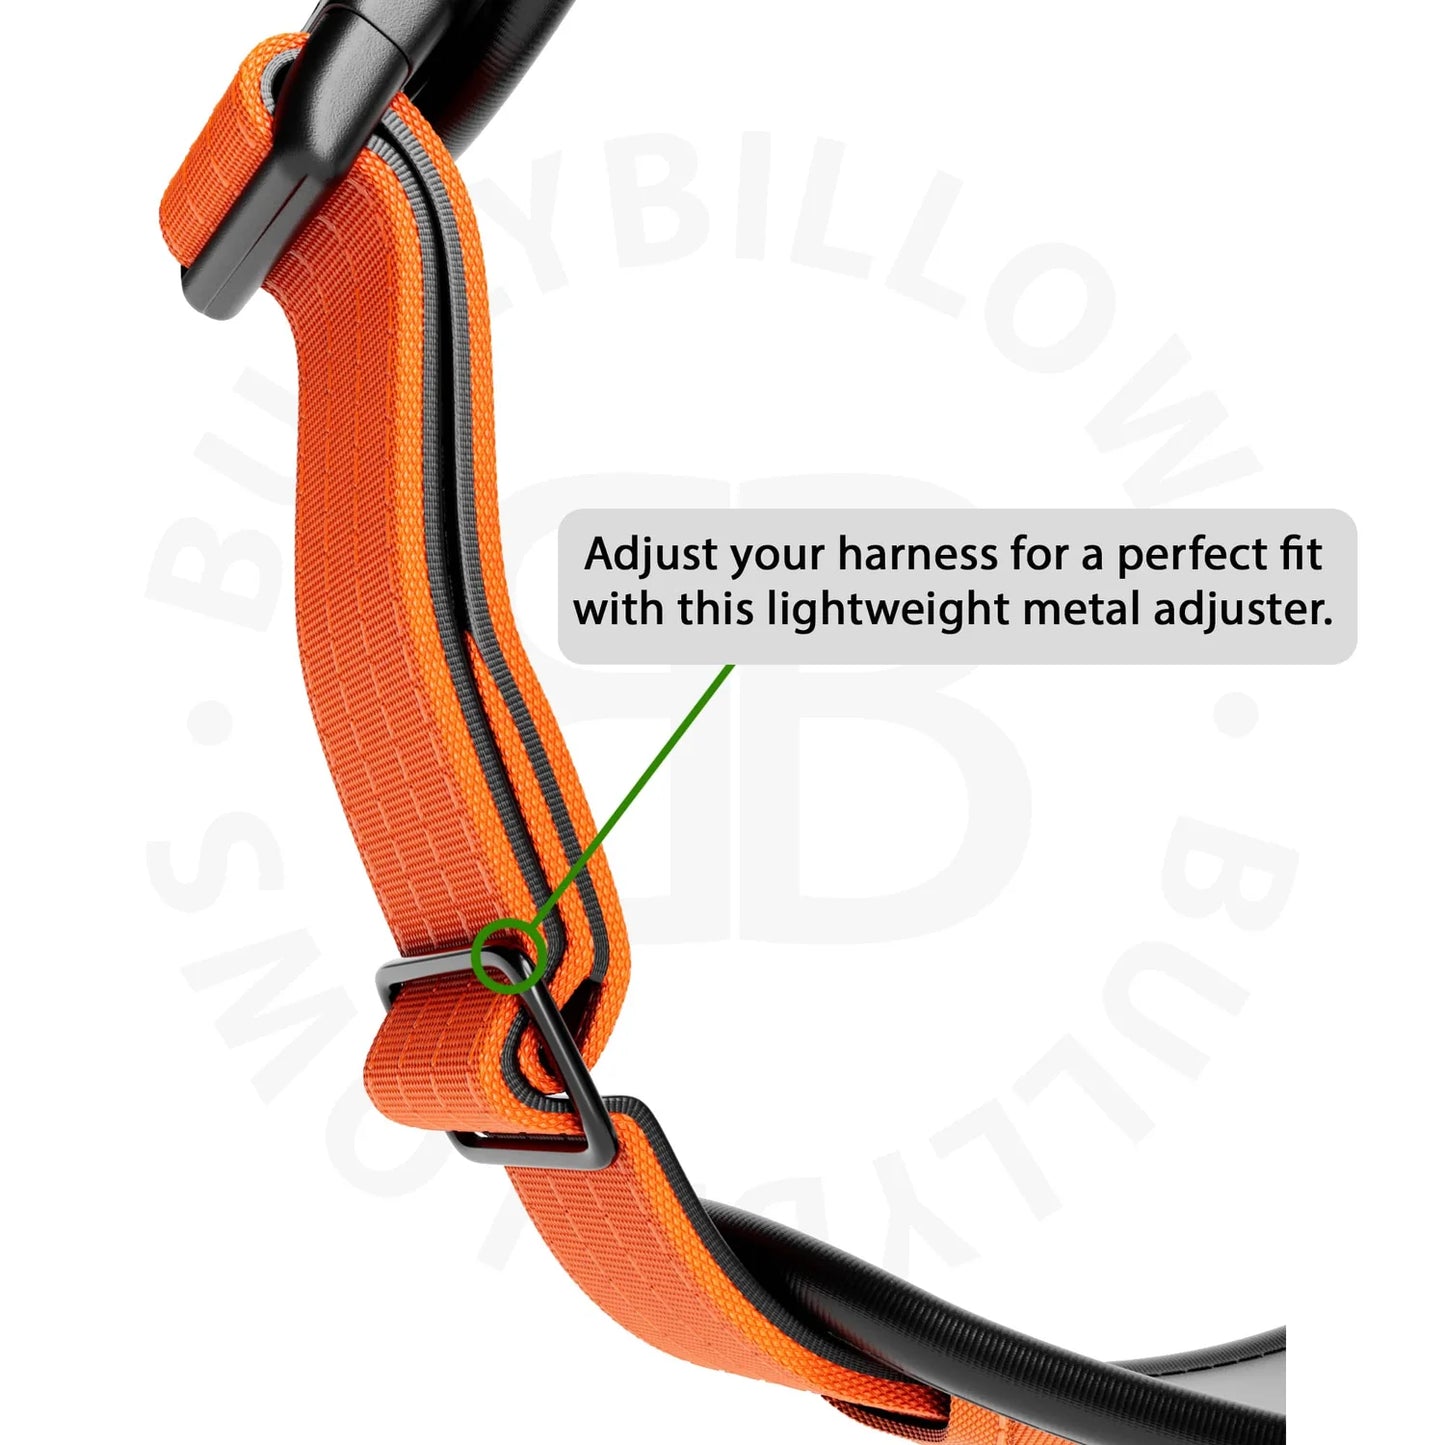 BullyBillows Premium Comfort Dog Harness Orange